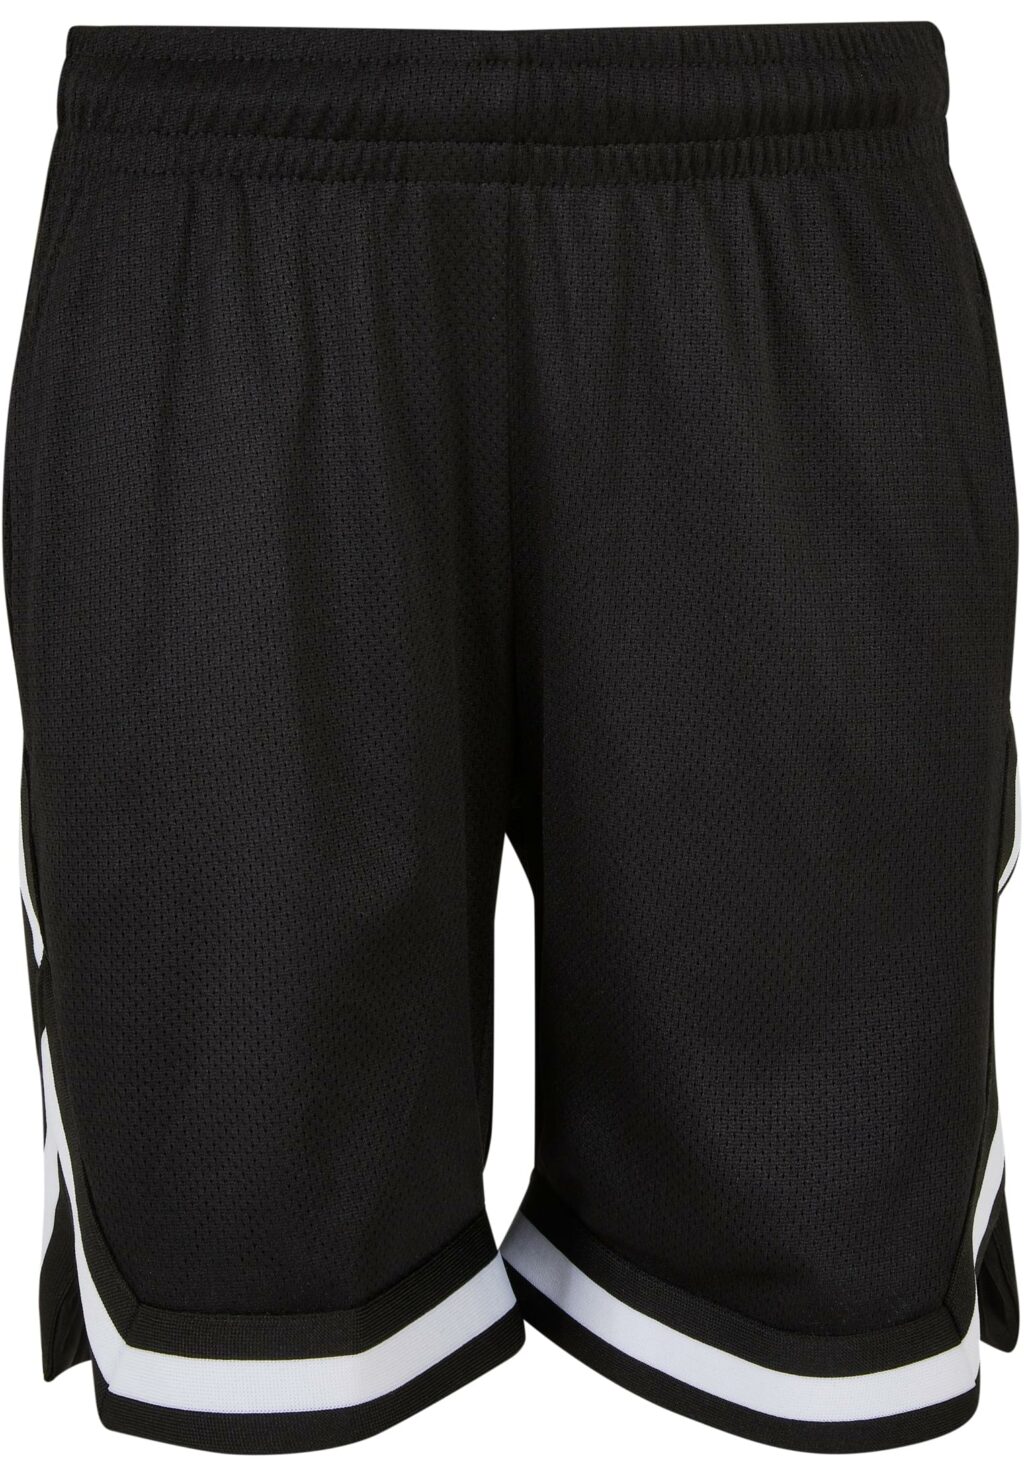 Boys Stripes Mesh Shorts black UCK243